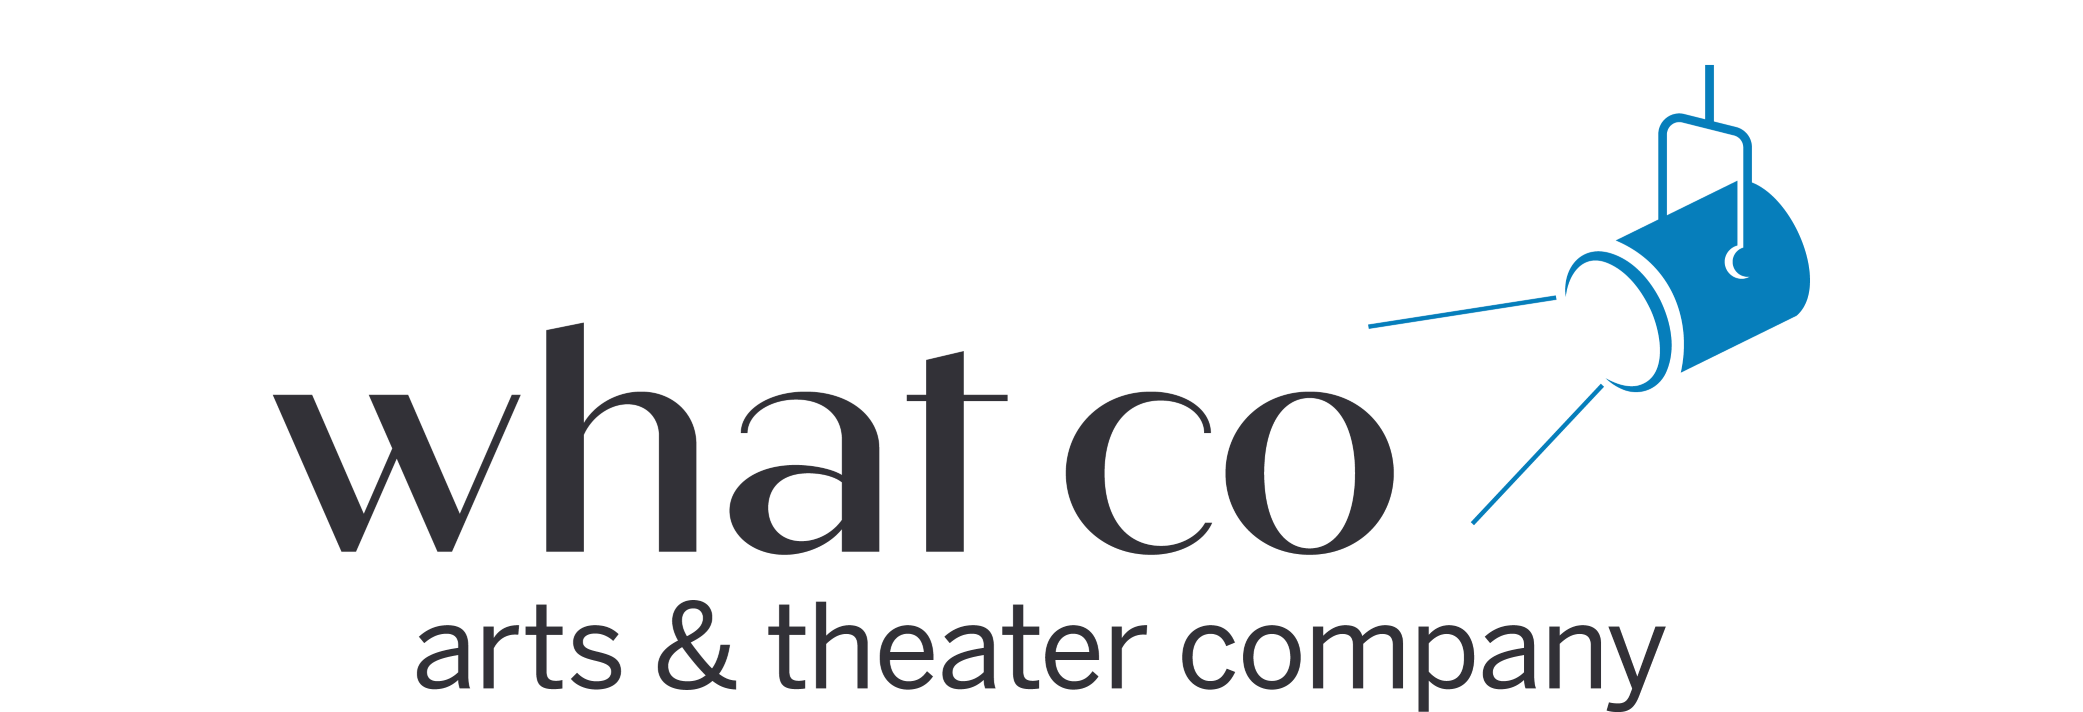 West Hudson Arts & Theatre Company